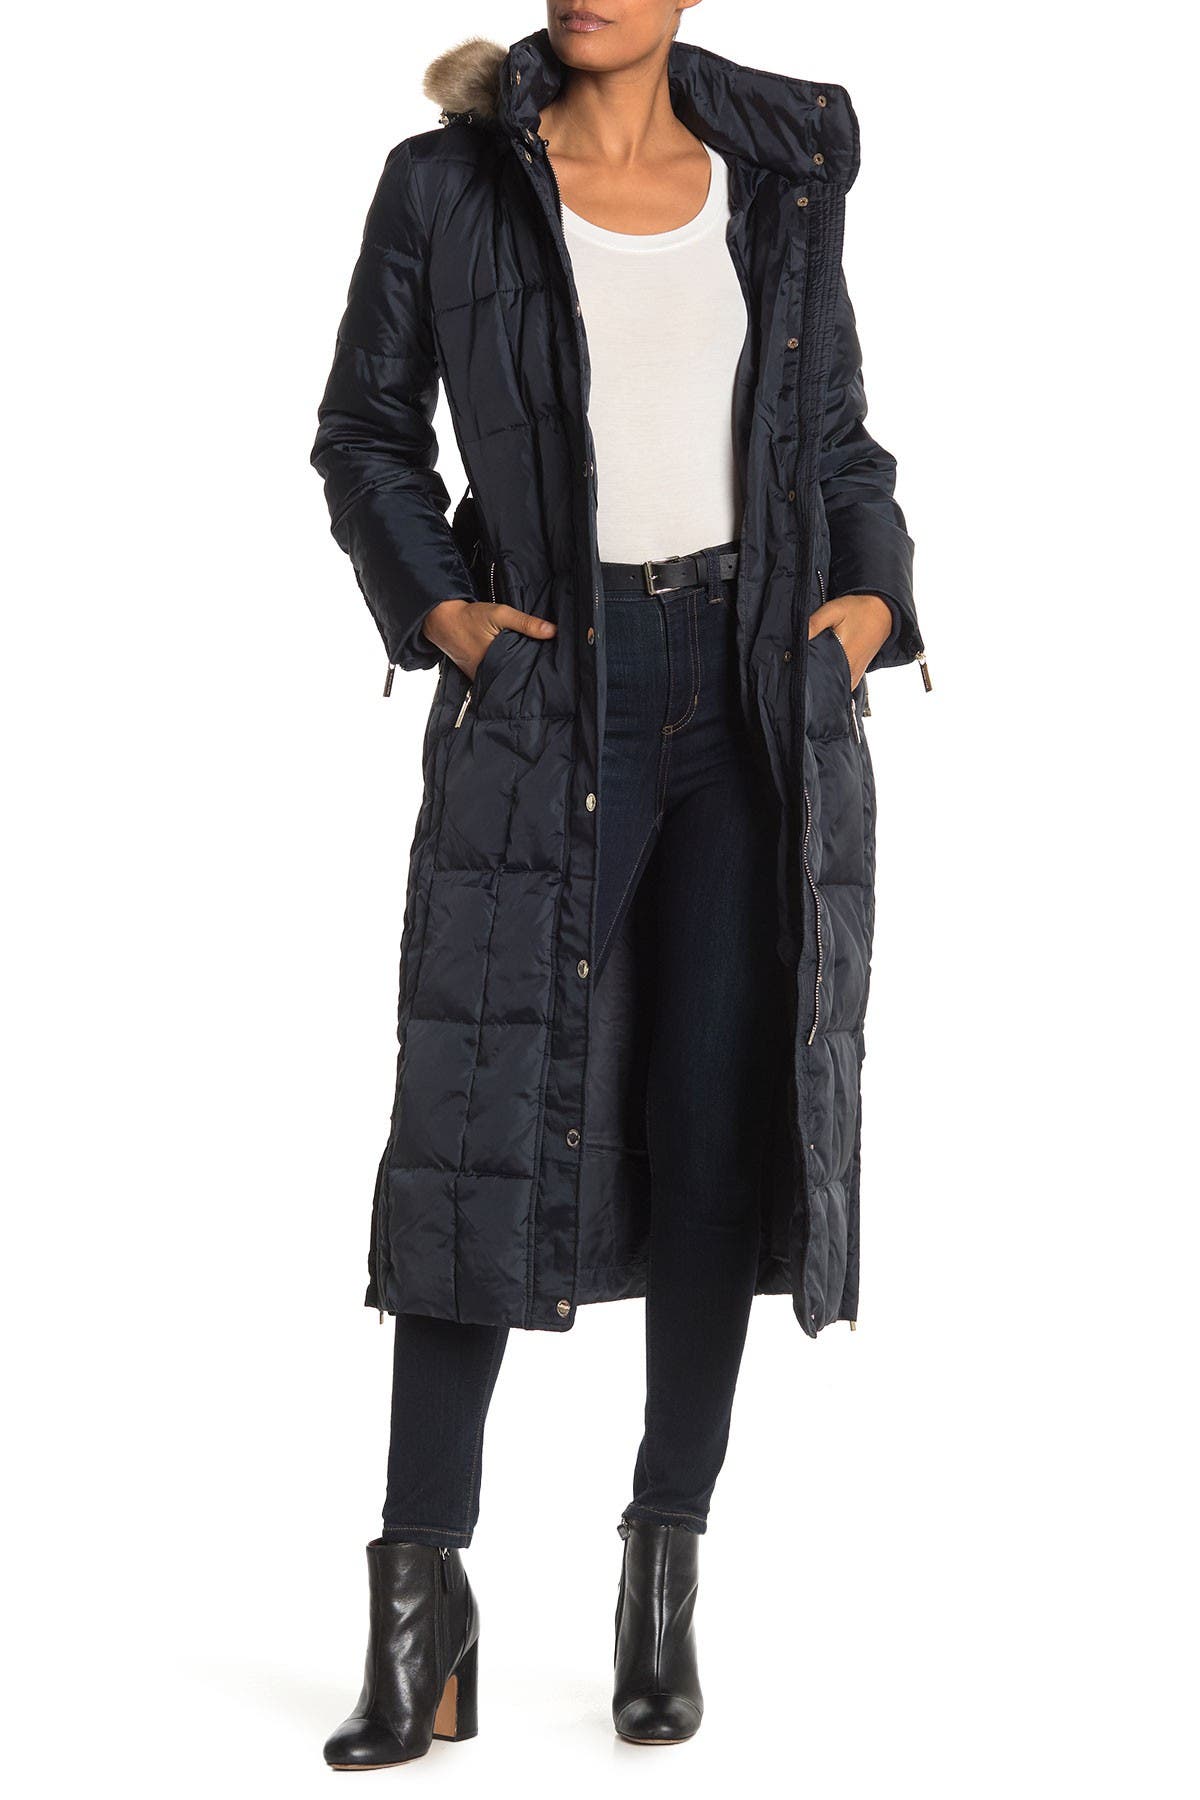 michael kors coat with fur hood